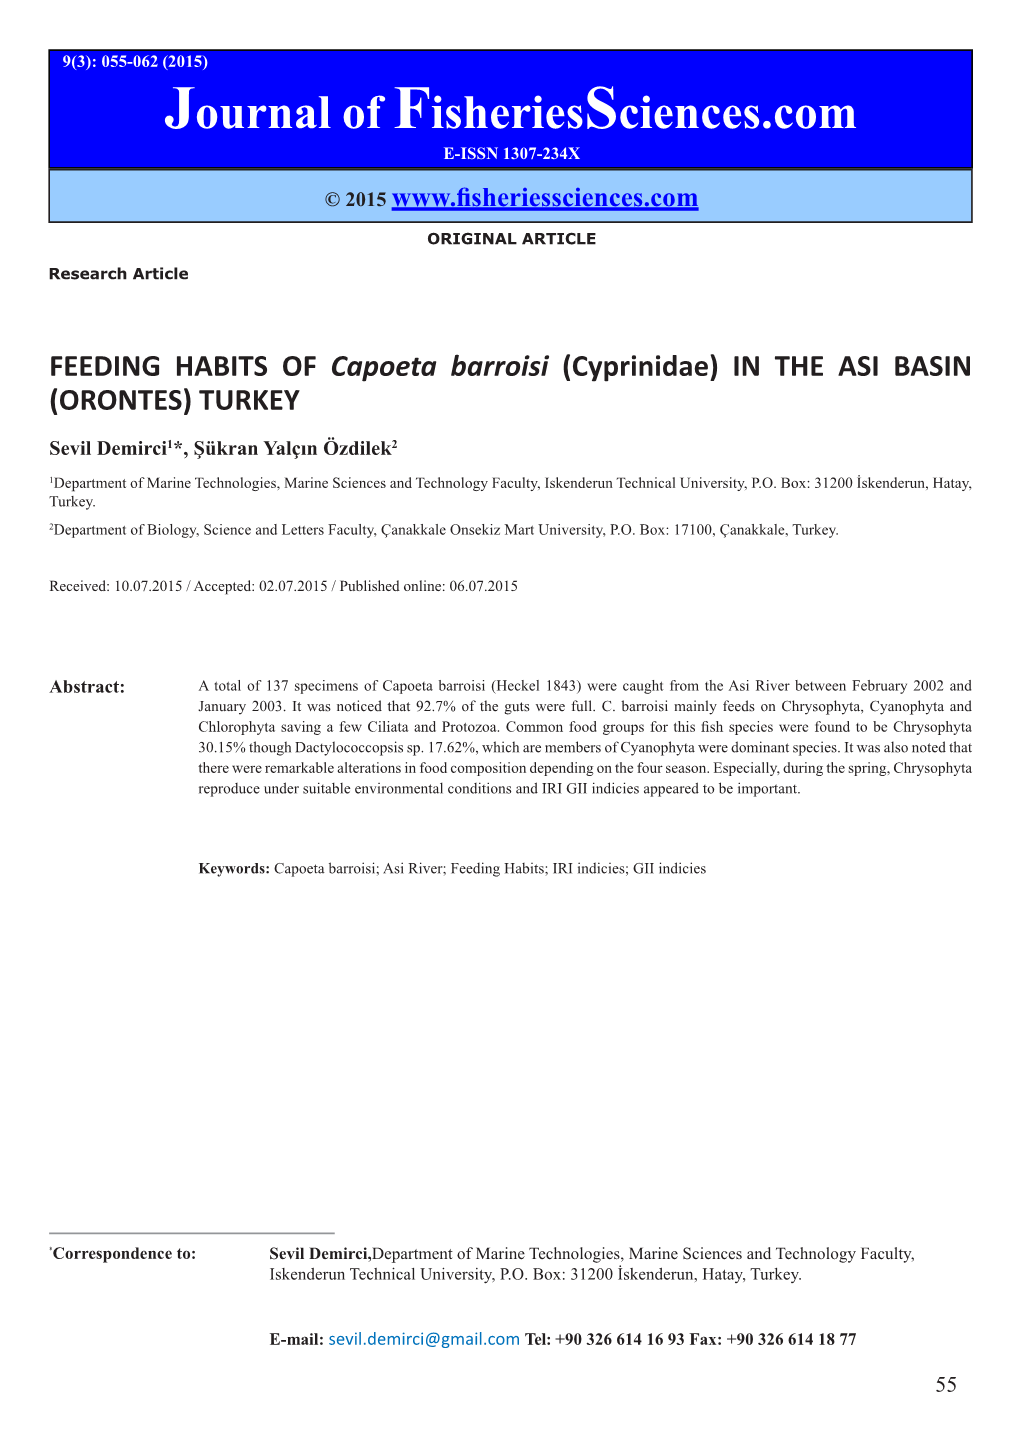 FEEDING HABITS of Capoeta Barroisi (Cyprinidae) in the ASI BASIN (ORONTES) TURKEY